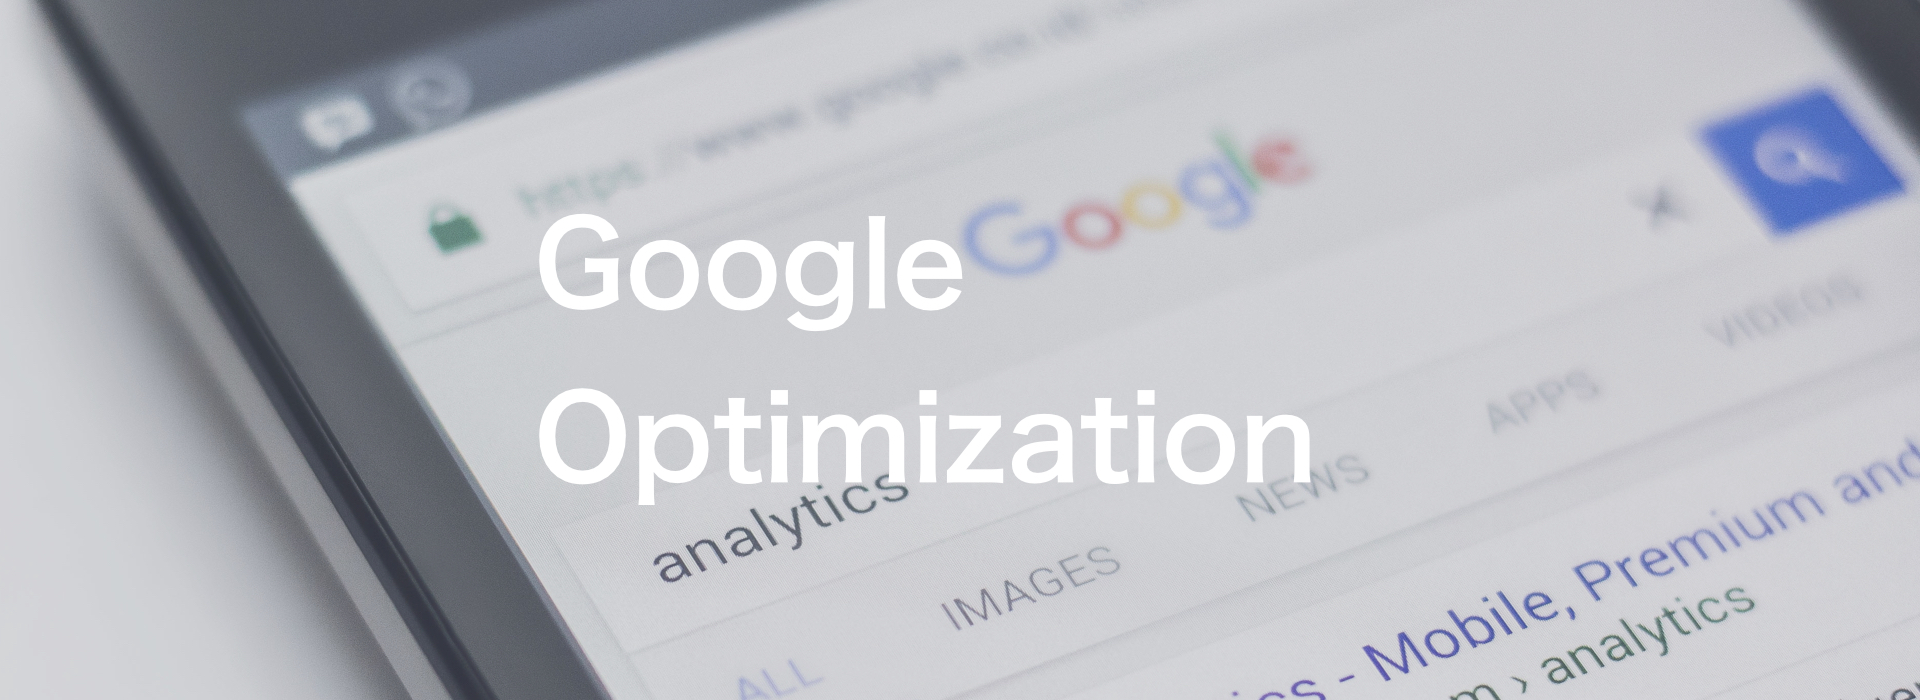 Google Optimization